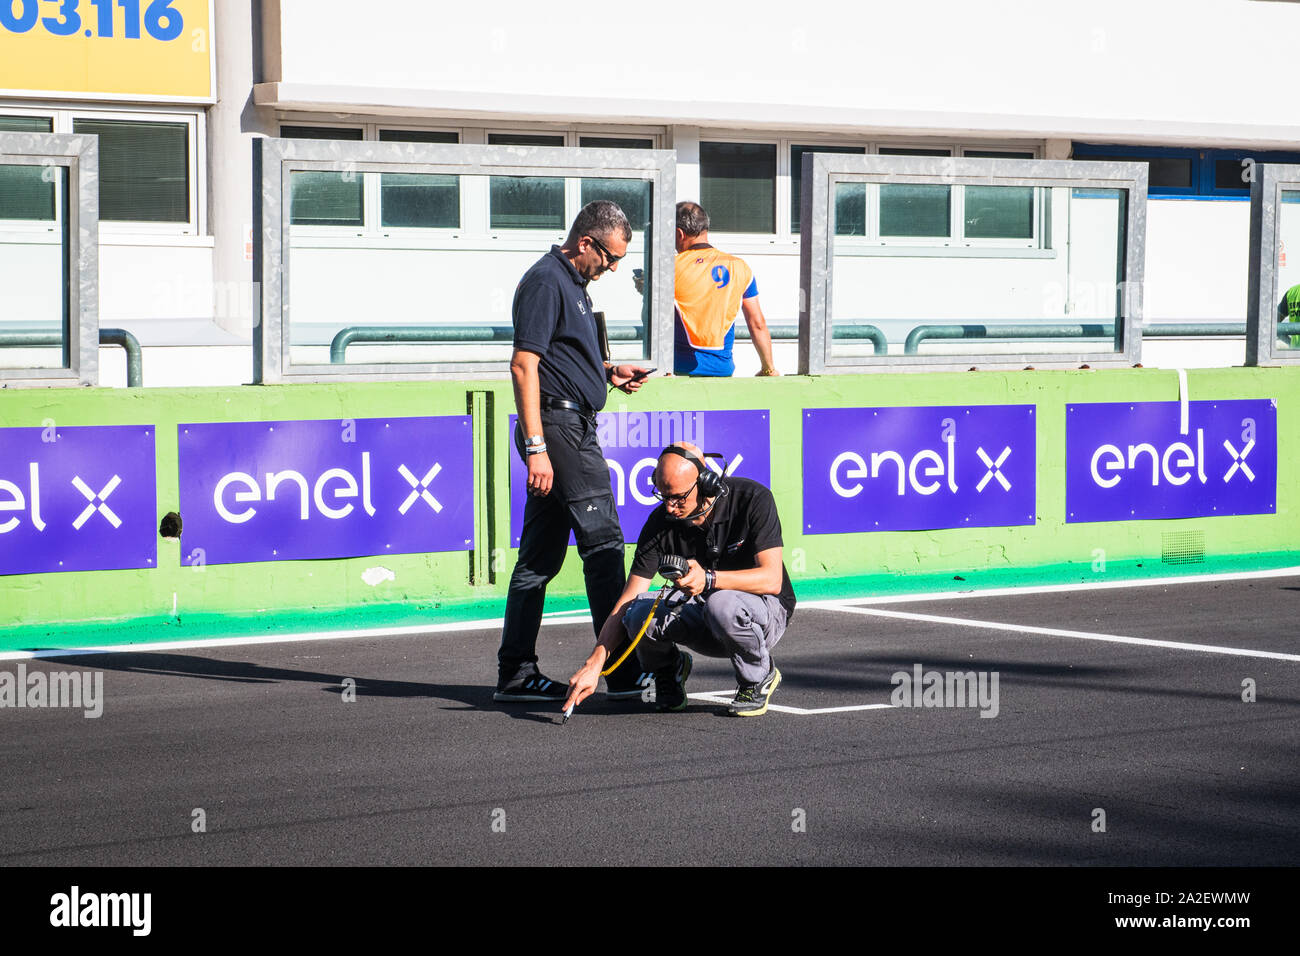 Vallelunga, Italy september 14 2019.  Racing car team people measurement ground temperature on asphalt racing circuit track Stock Photo